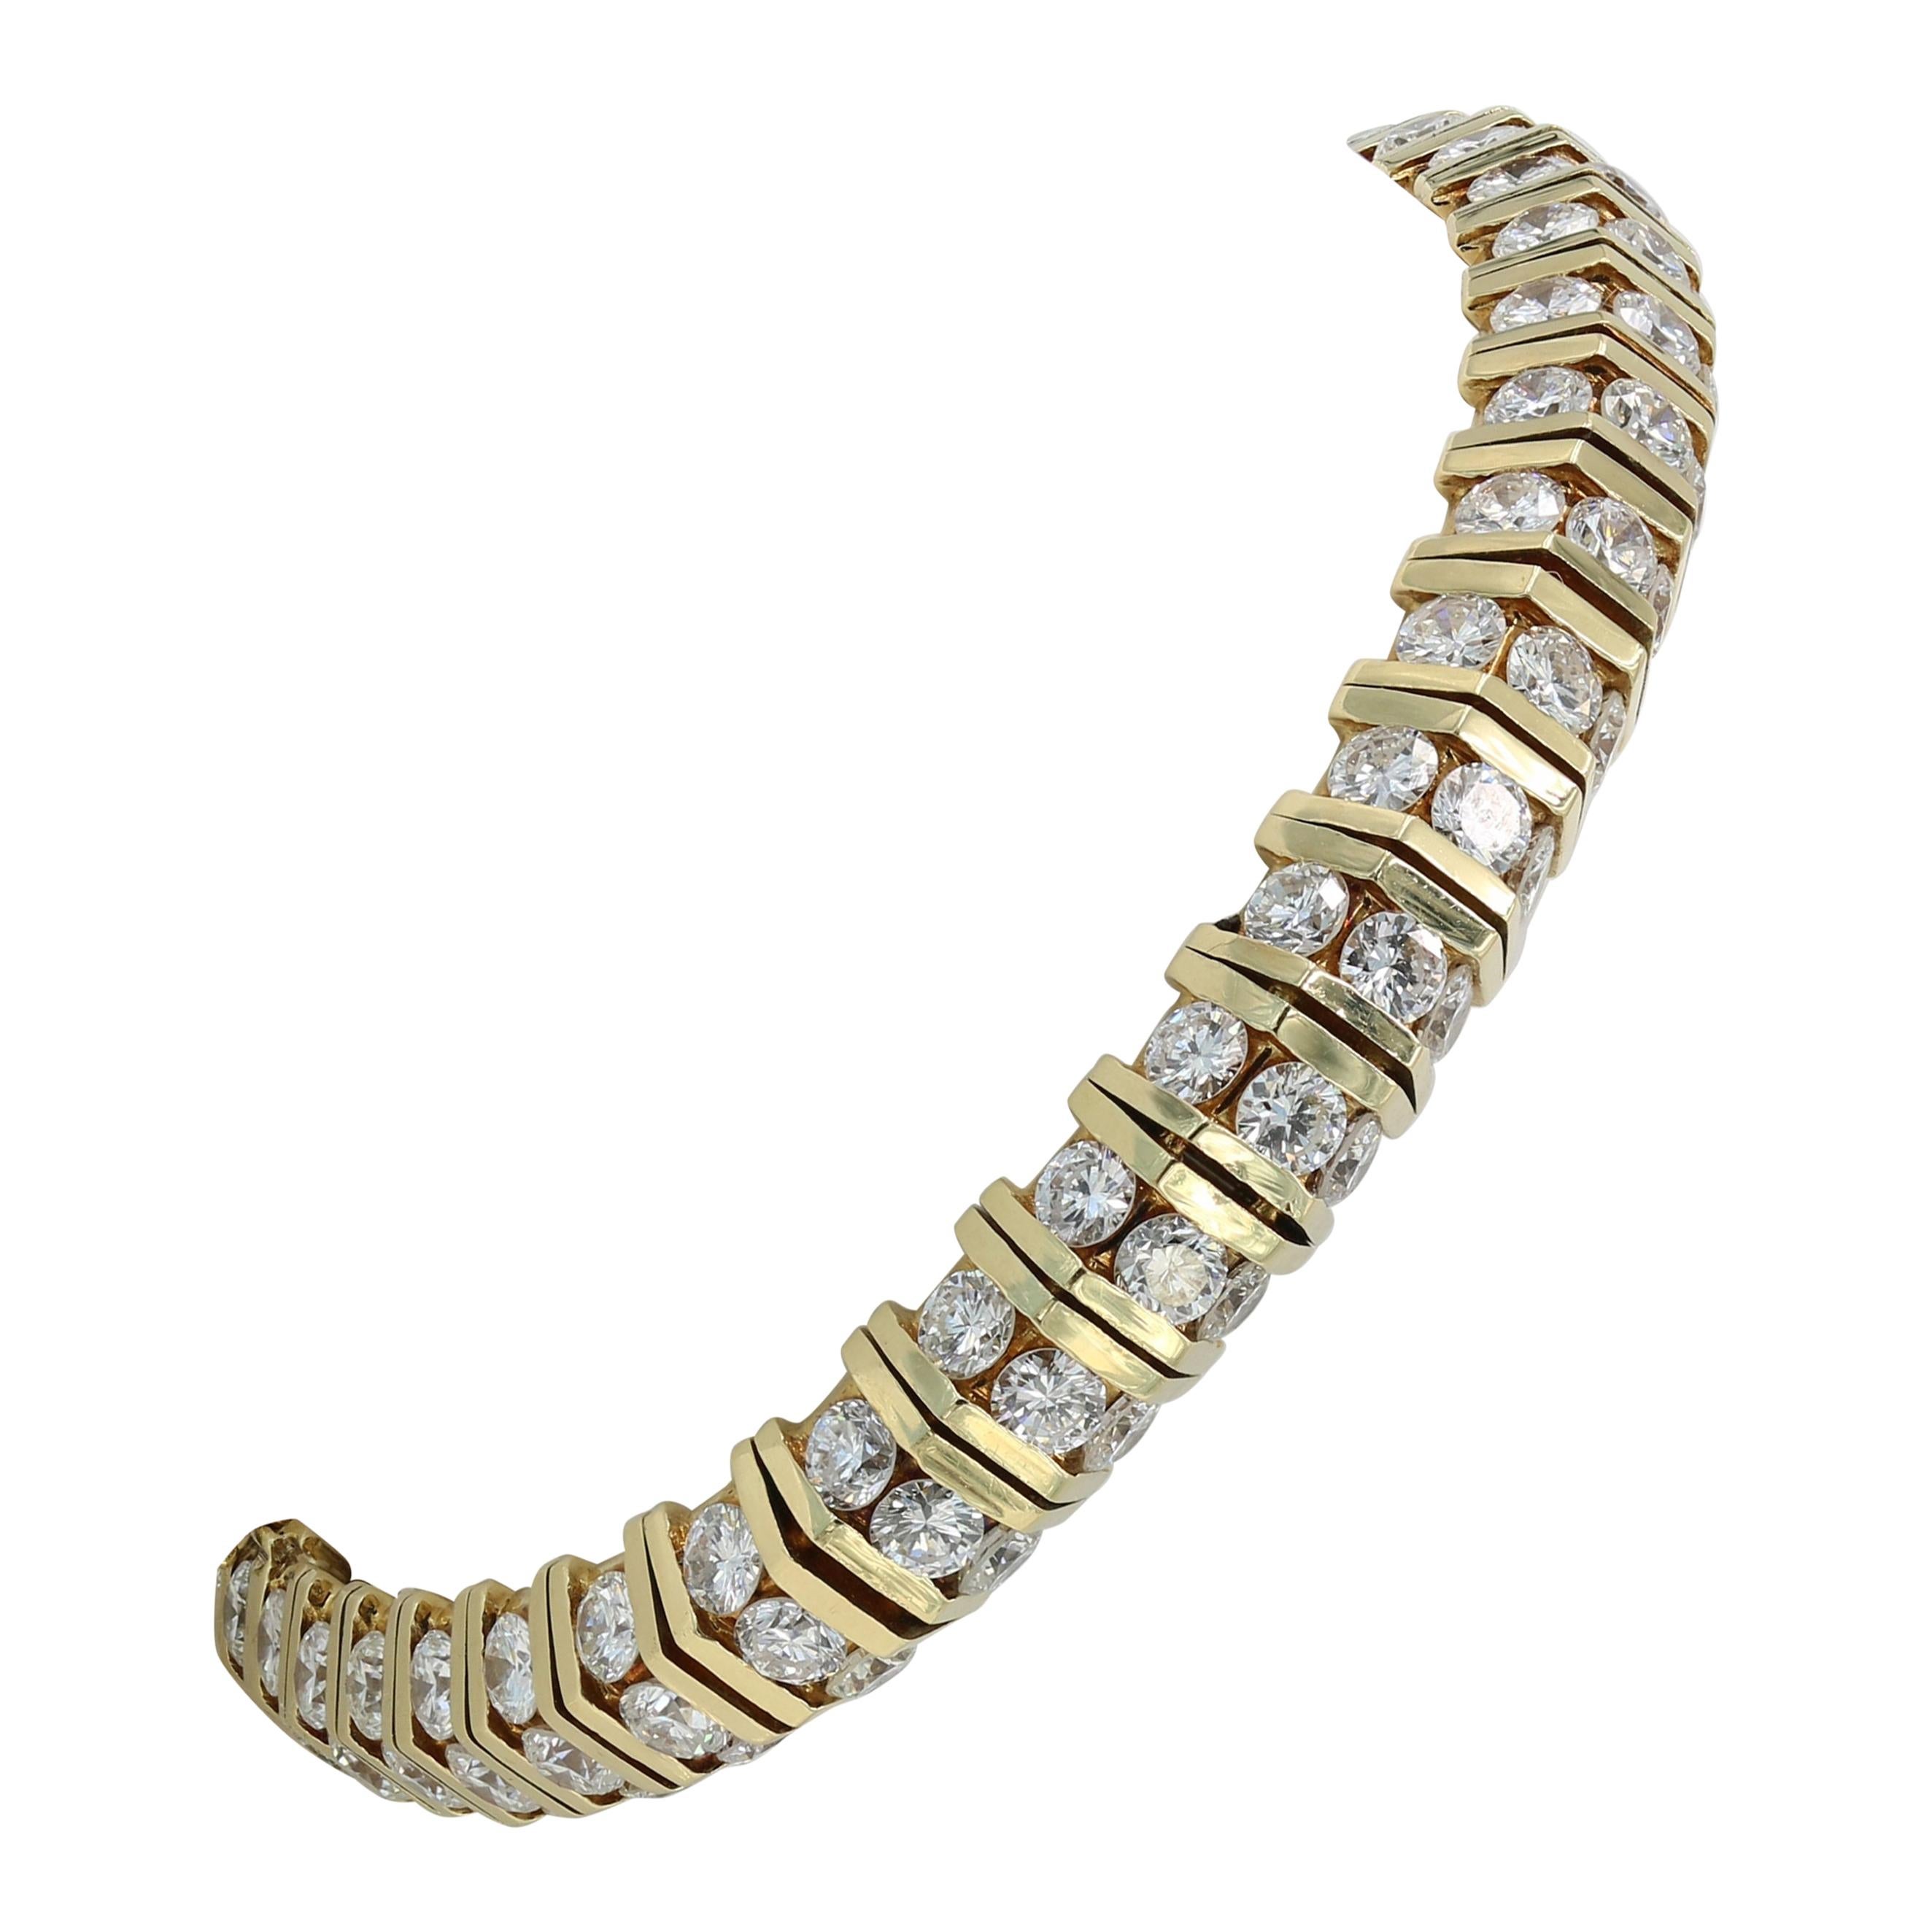 Dennis Lampert Designed 18 Karat Yellow Gold and Diamond Bracelet For Sale